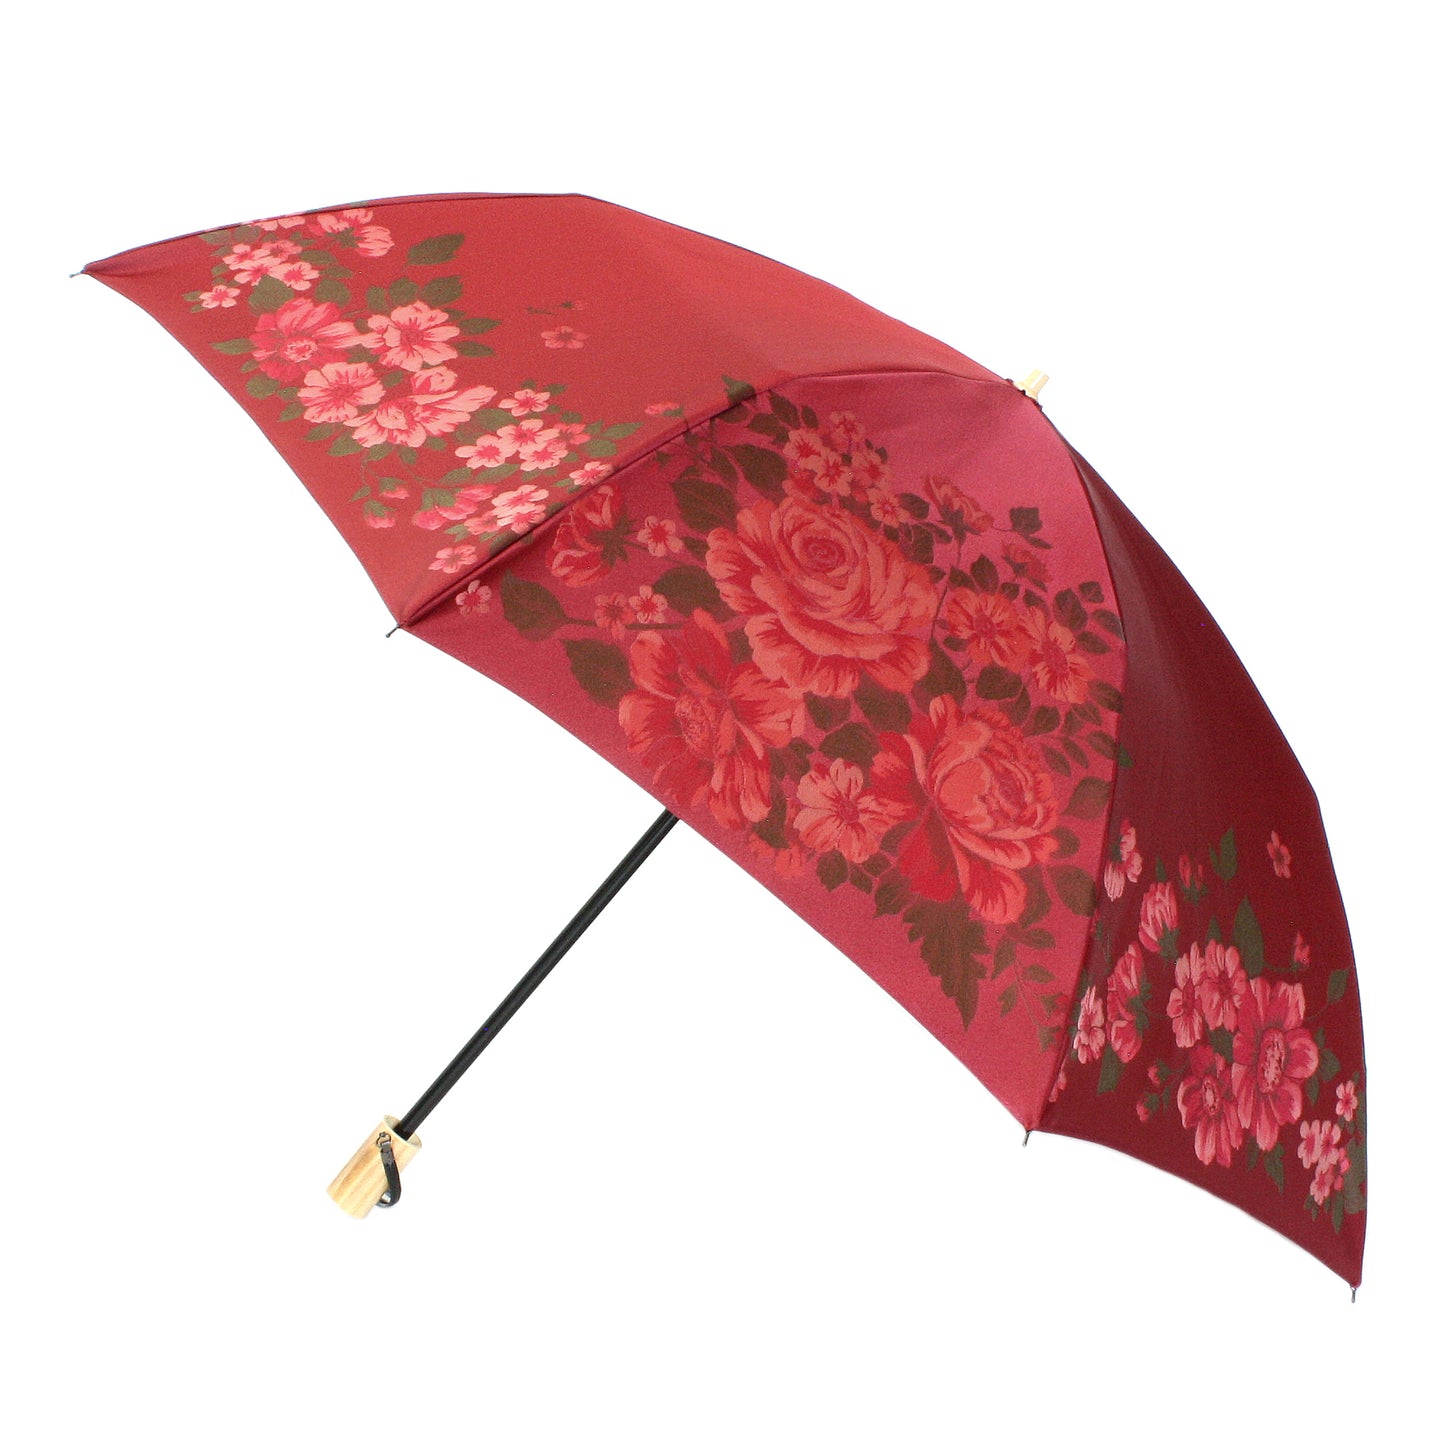 Rain & Sun Umbrella "Large Rose" - By Emotion International